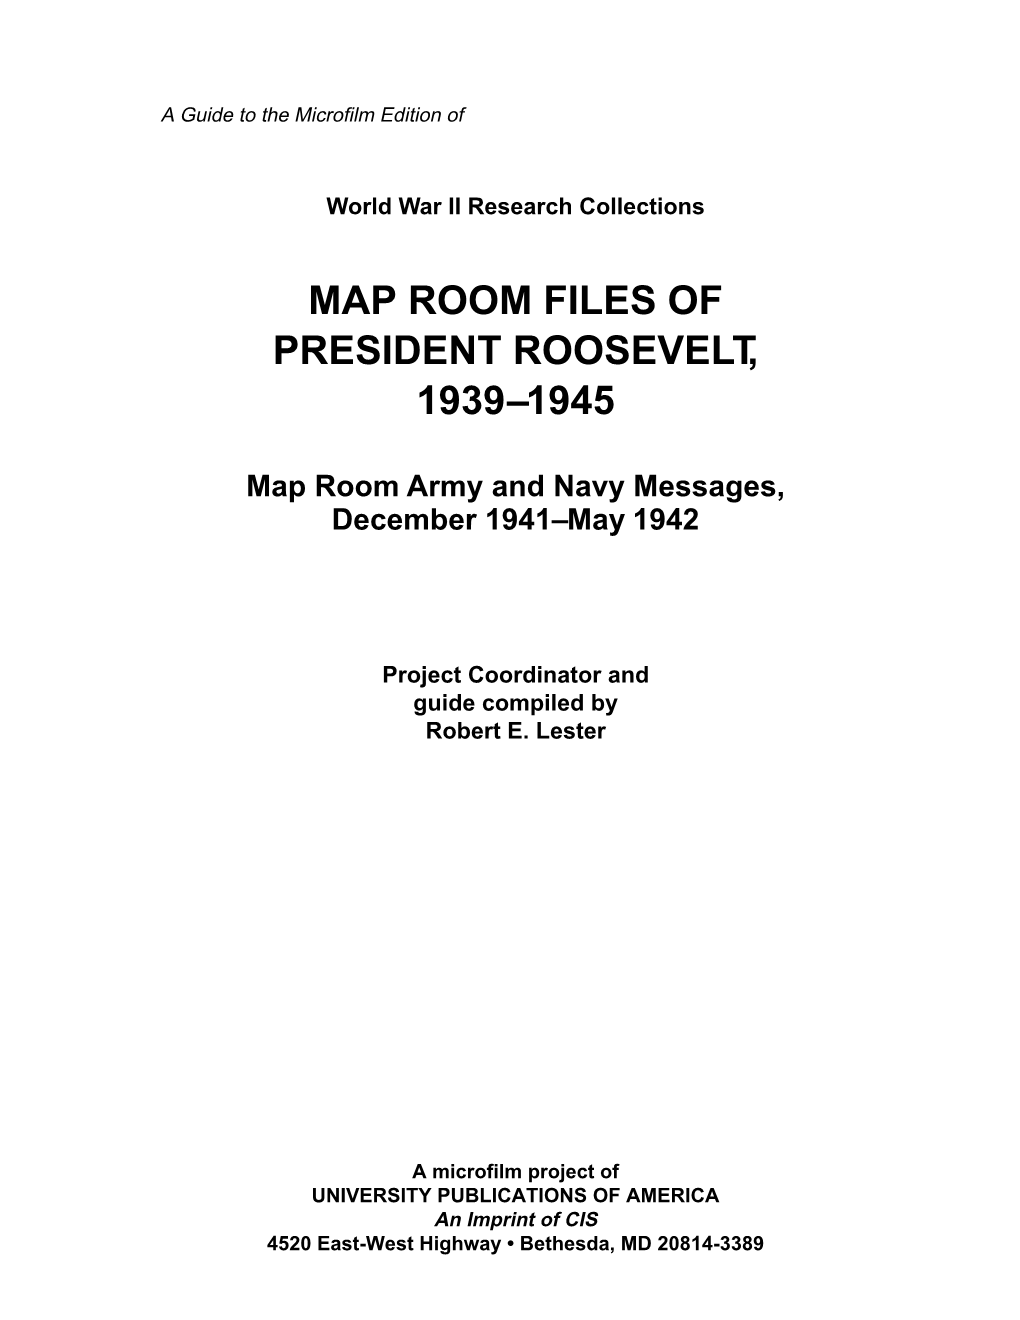 Map Room Files of President Roosevelt, 1939–1945